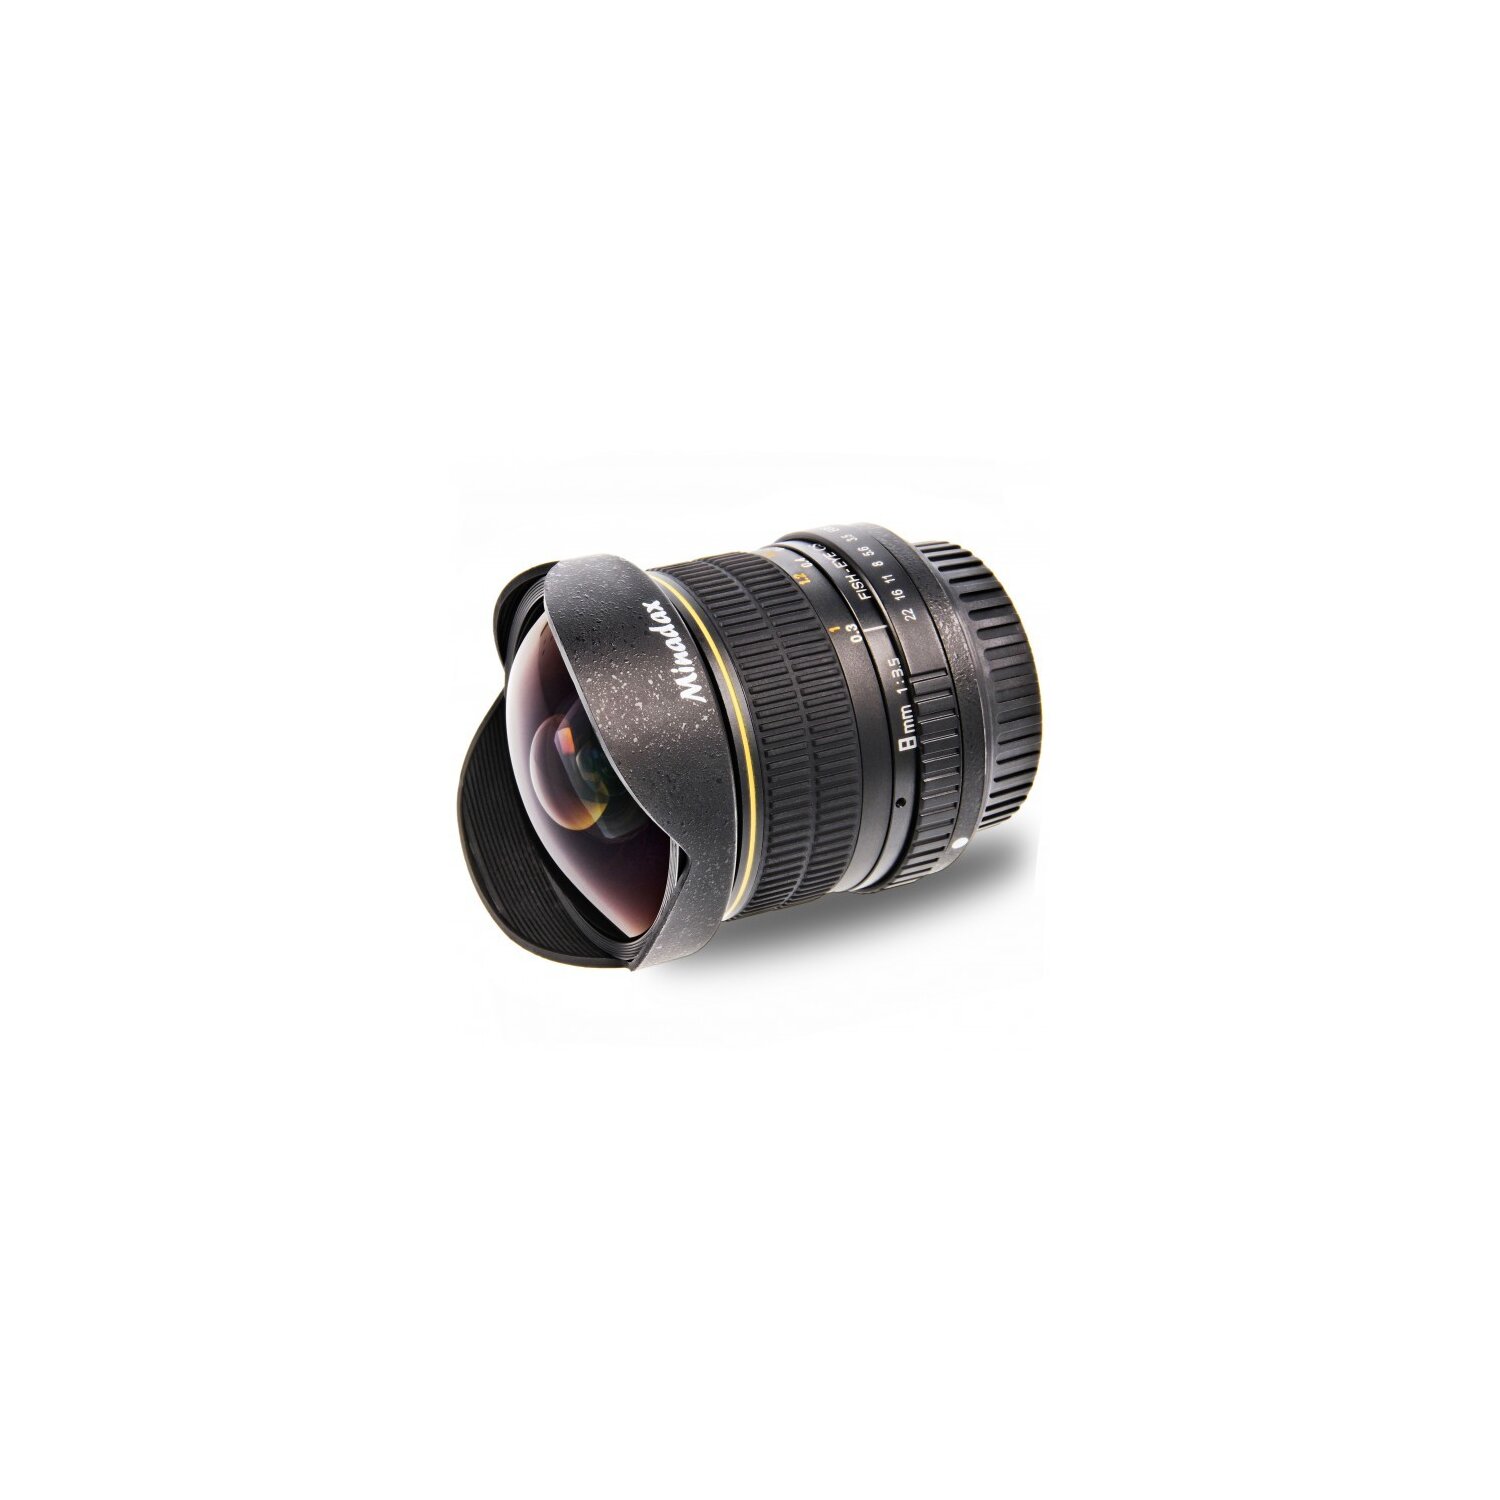 Minadax 8,0 mm 1:3,5 Fisheyeobjektiv kompatibel mit Nikon D7100, D7000, D5200, D5100, D5000, D3200, D3100, D3000, D800, D700, D600, D300(s), D200, D100, D90, D80, D70(s), D60, D40(x), D3/D2/D1 Serie für Digitale SLR Kameras + Neopren Objektivbeutel